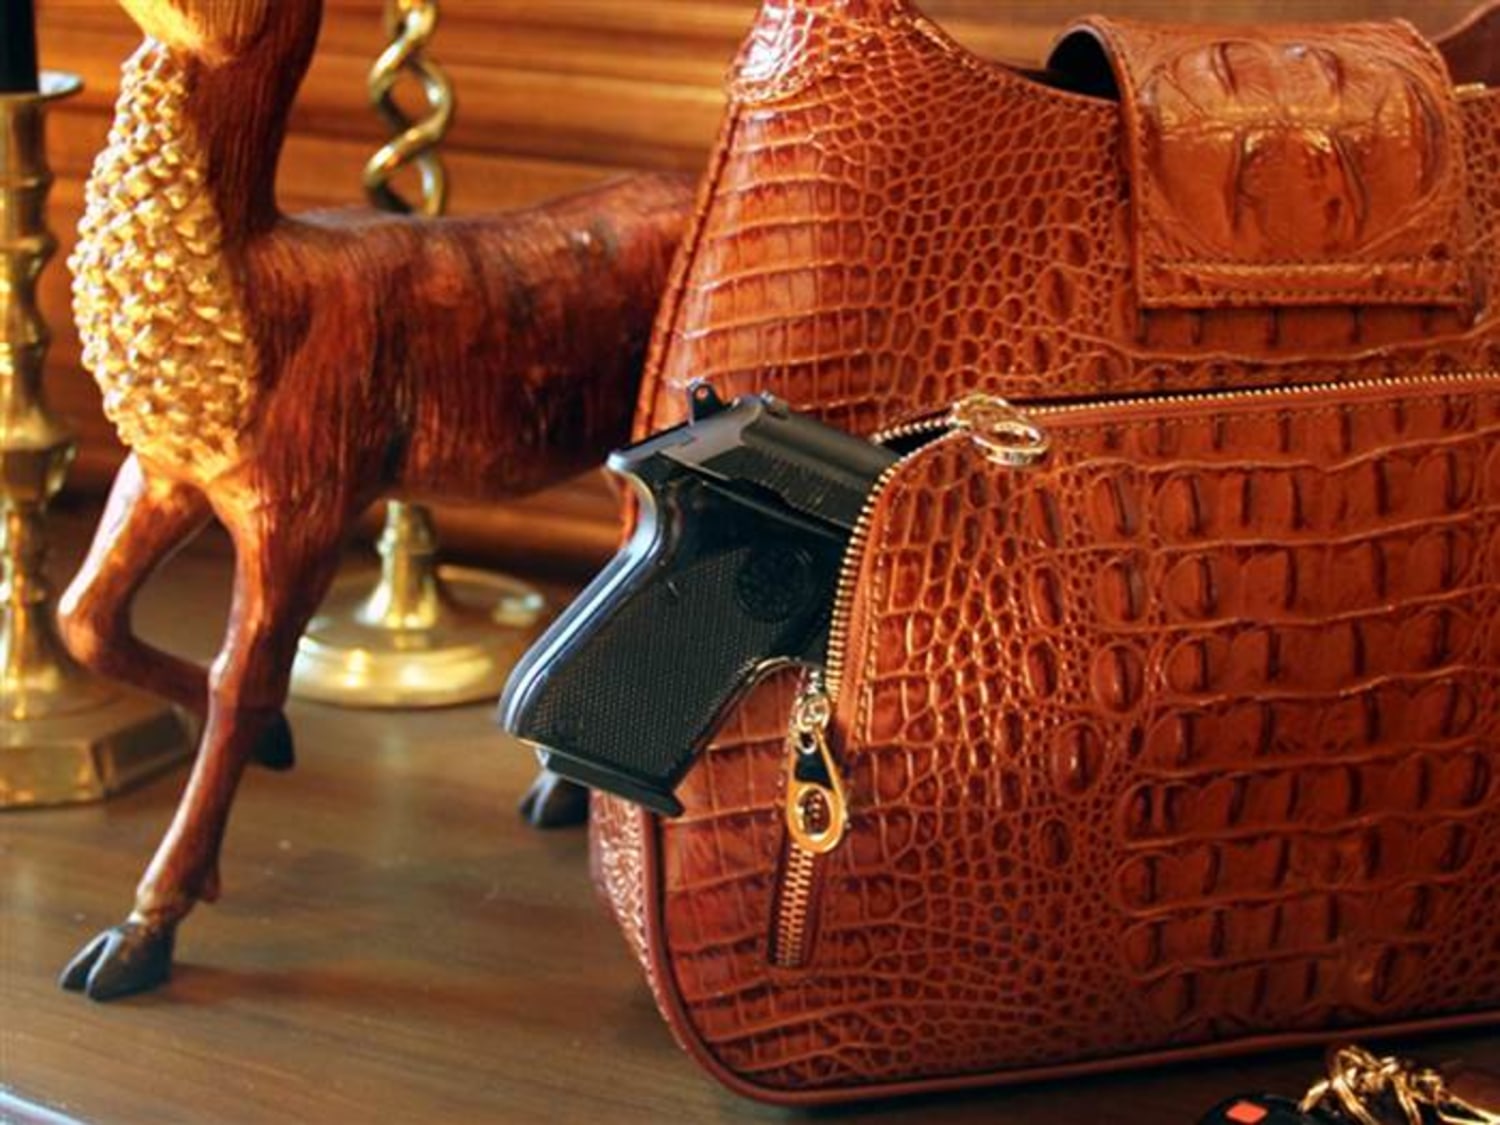 High-end purses help women conceal guns